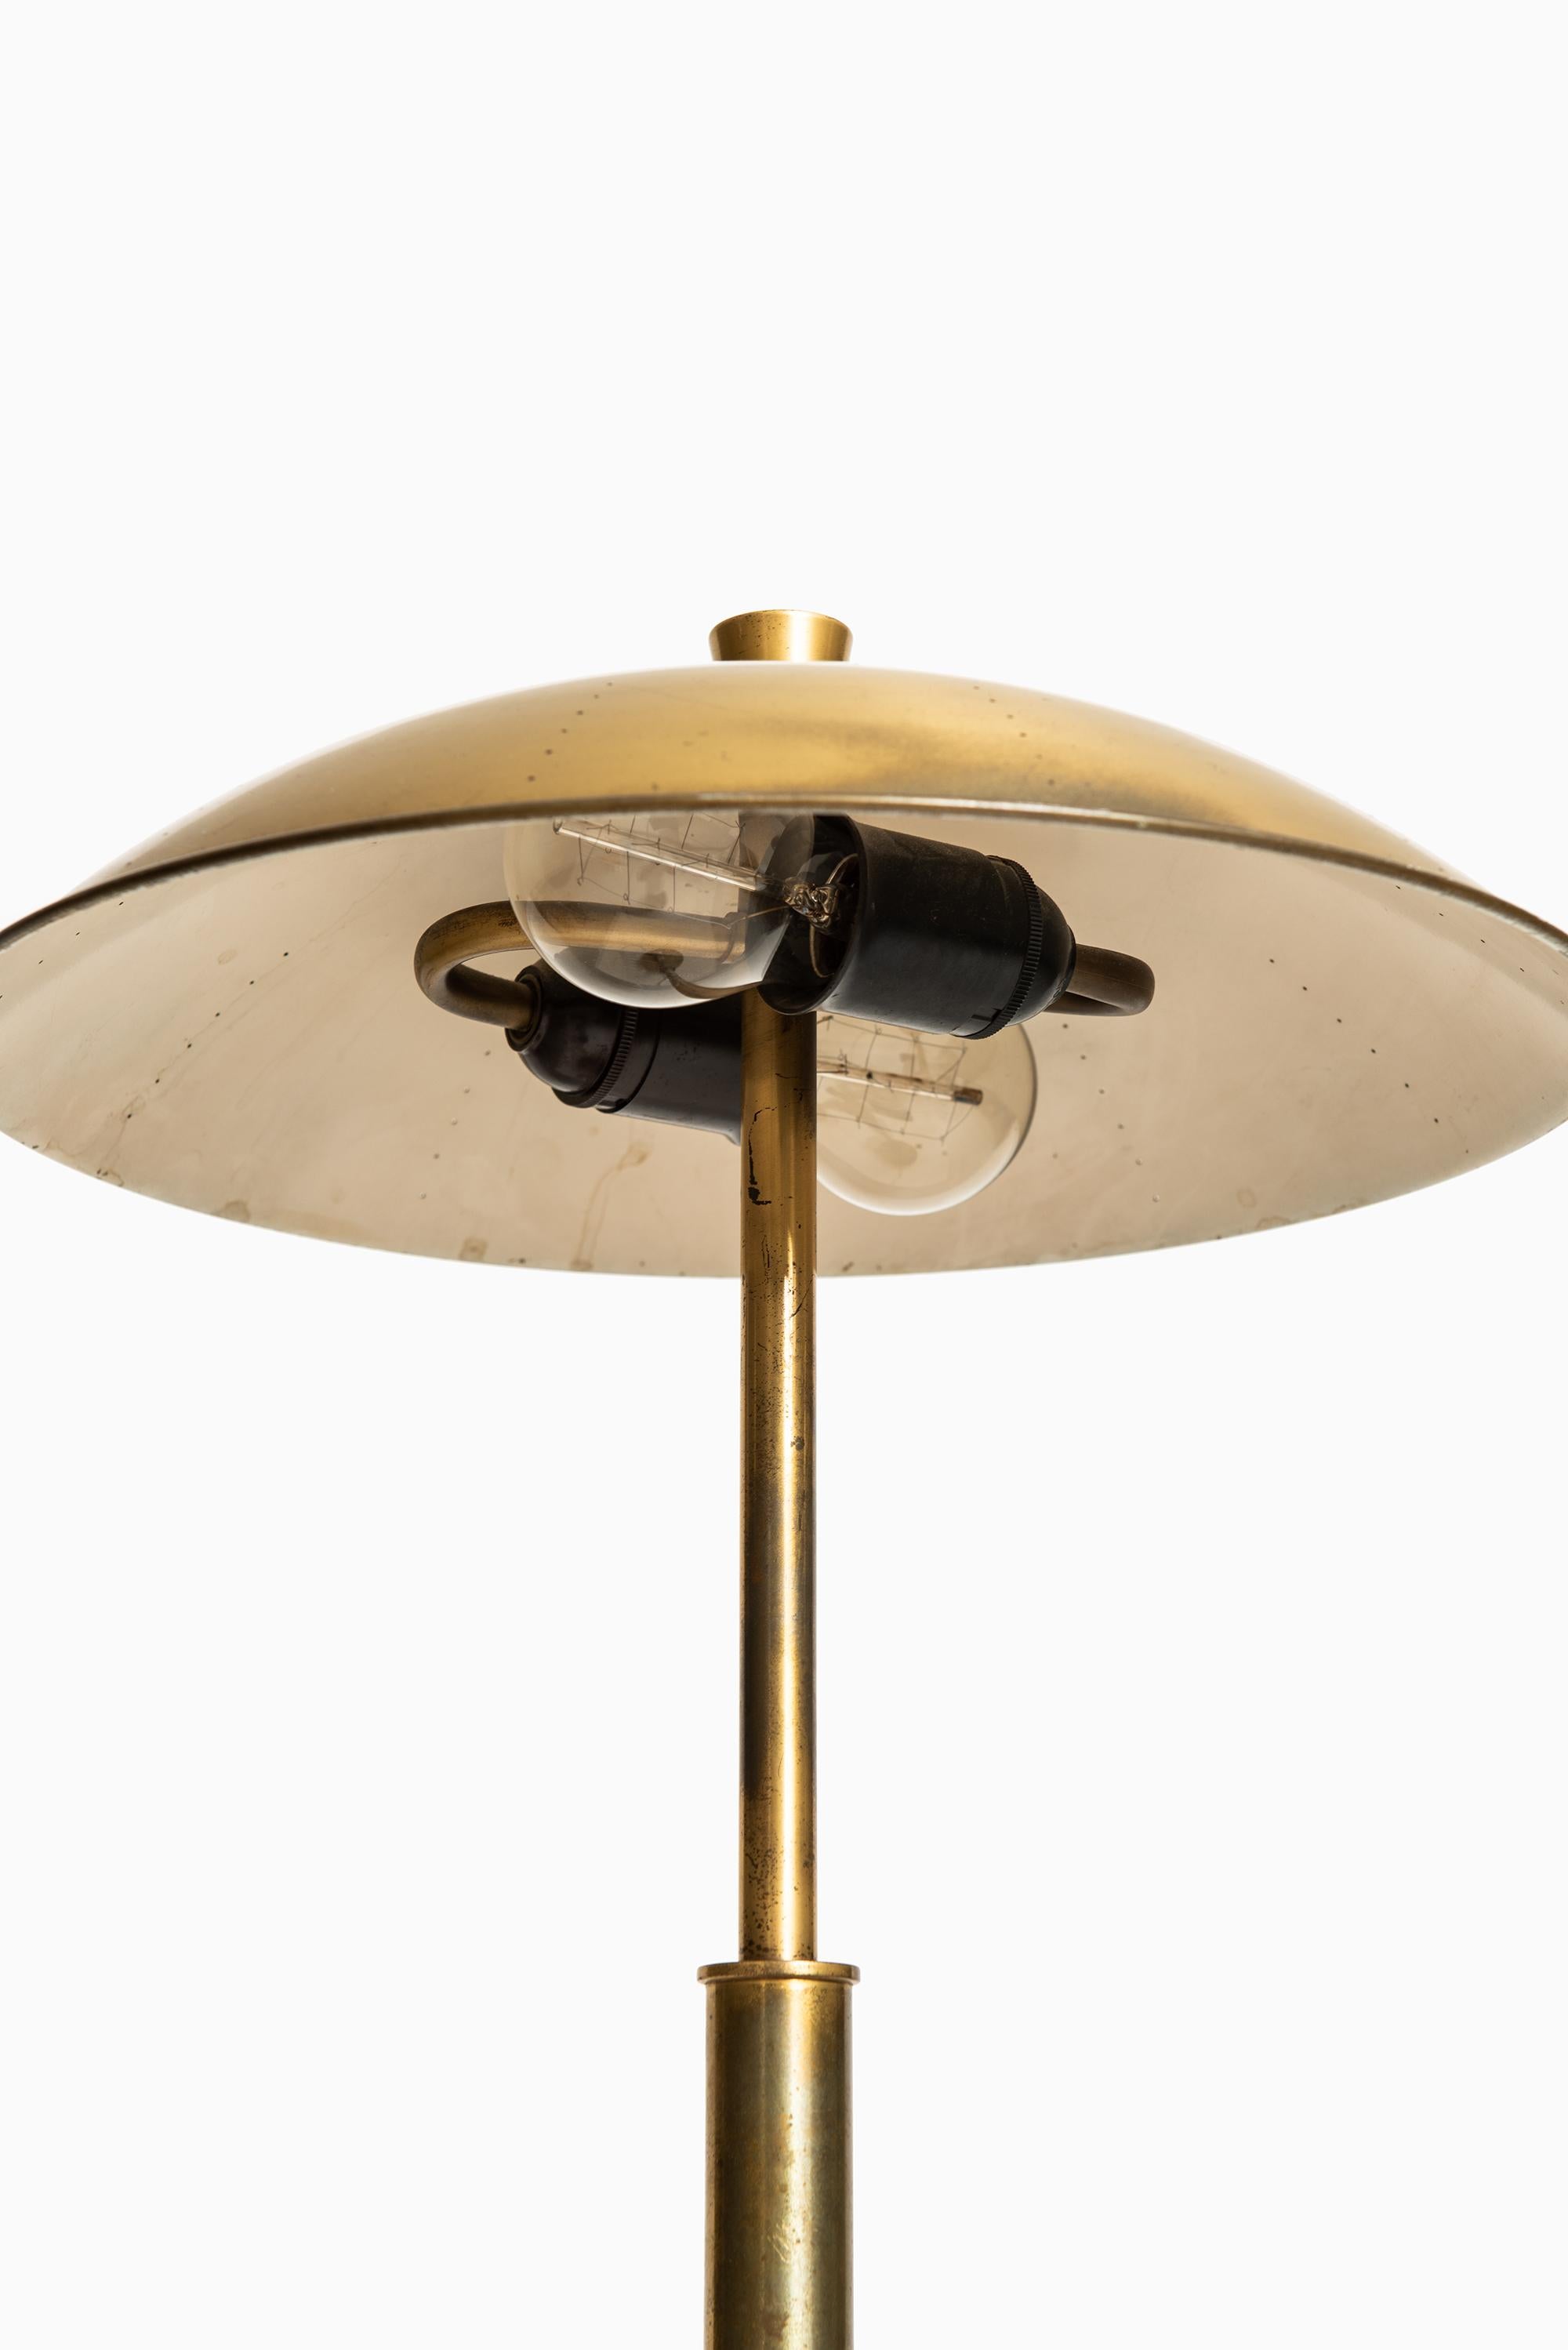 Scandinavian Modern Table Lamp in Brass by Unknown Designer Produced in Sweden